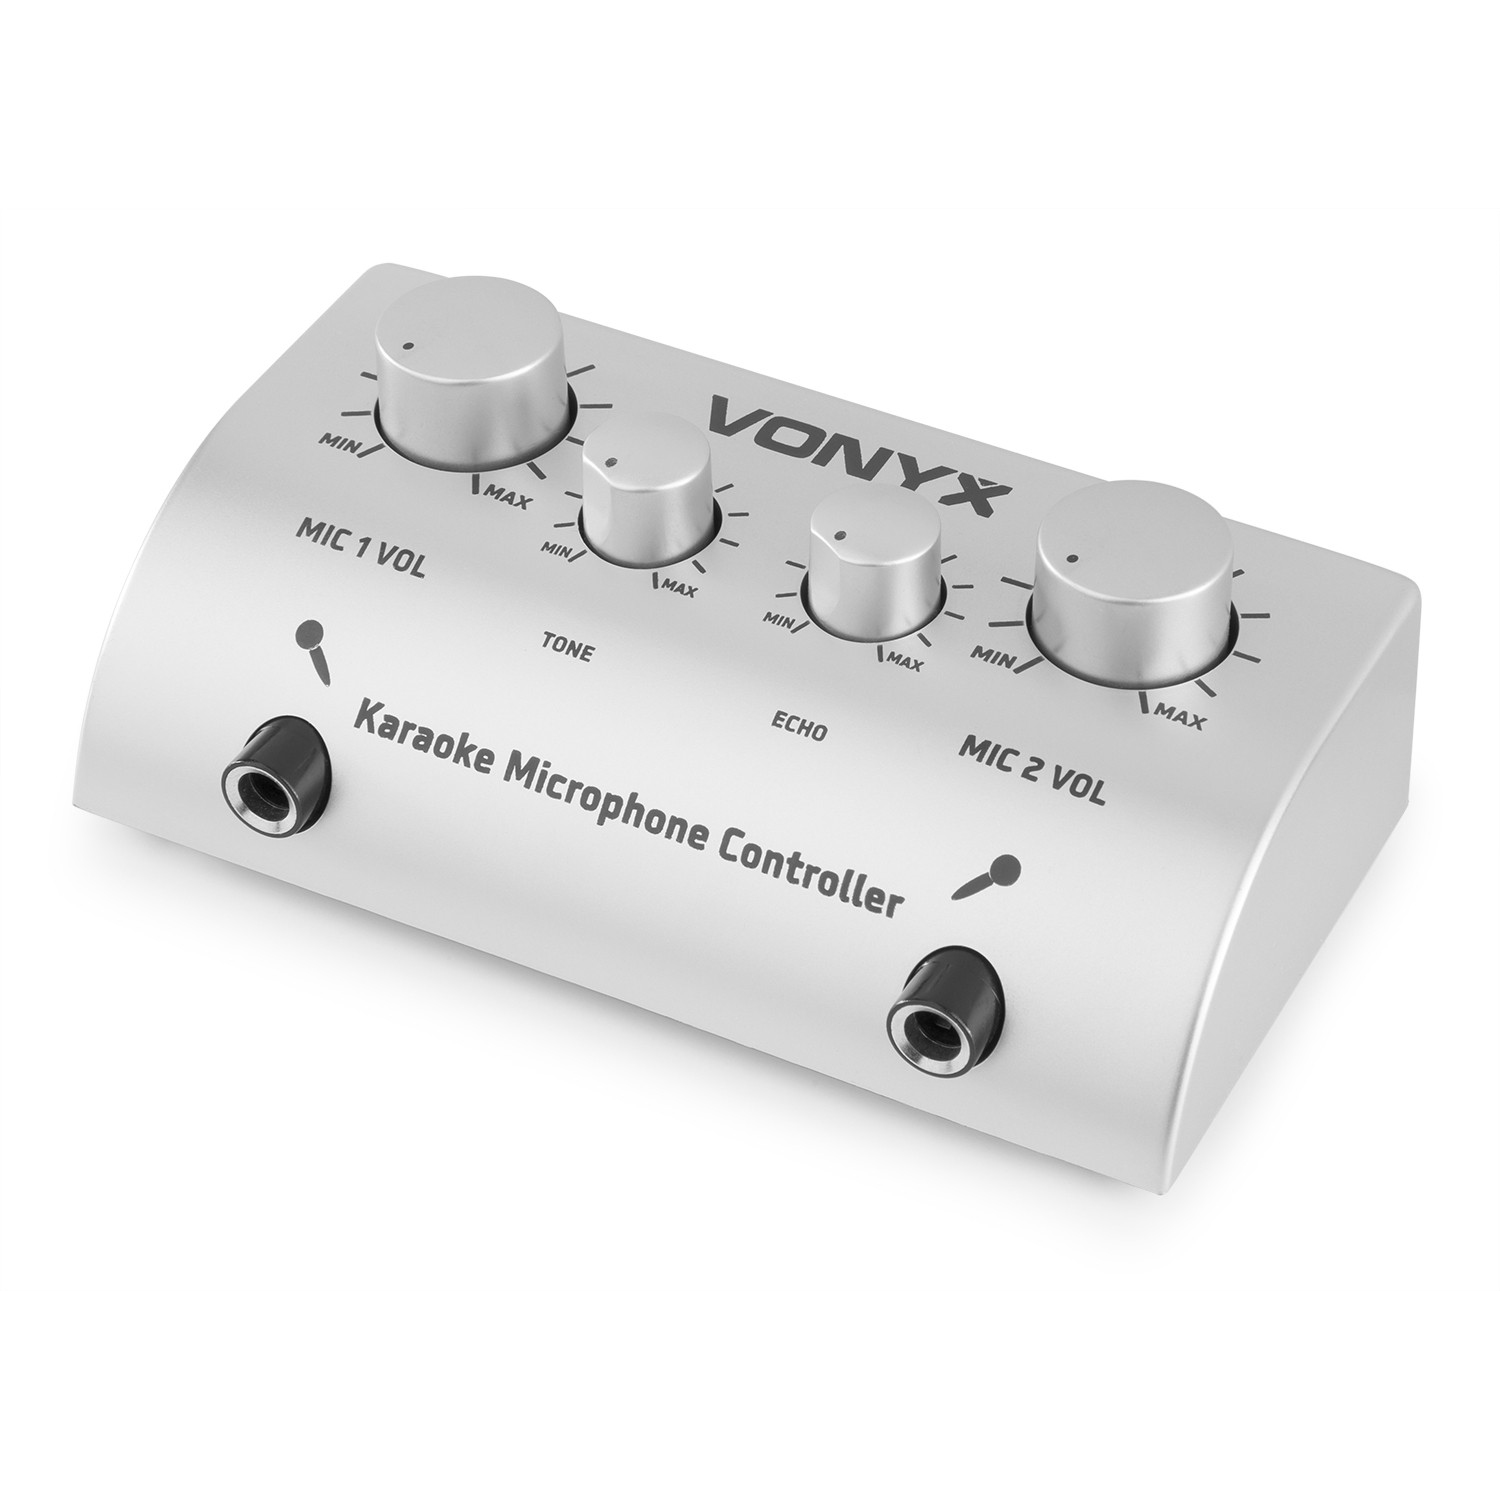 VONYX 103.112 Karaoke Microphone Mixer-Controller